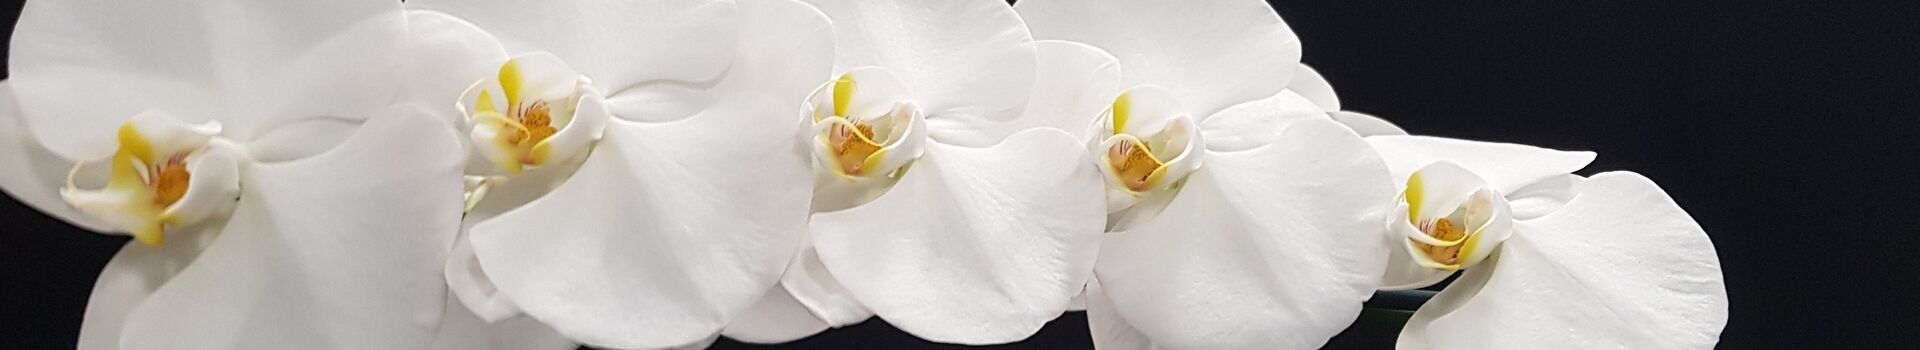 Aris Vision System - Phalaenopsis flowers